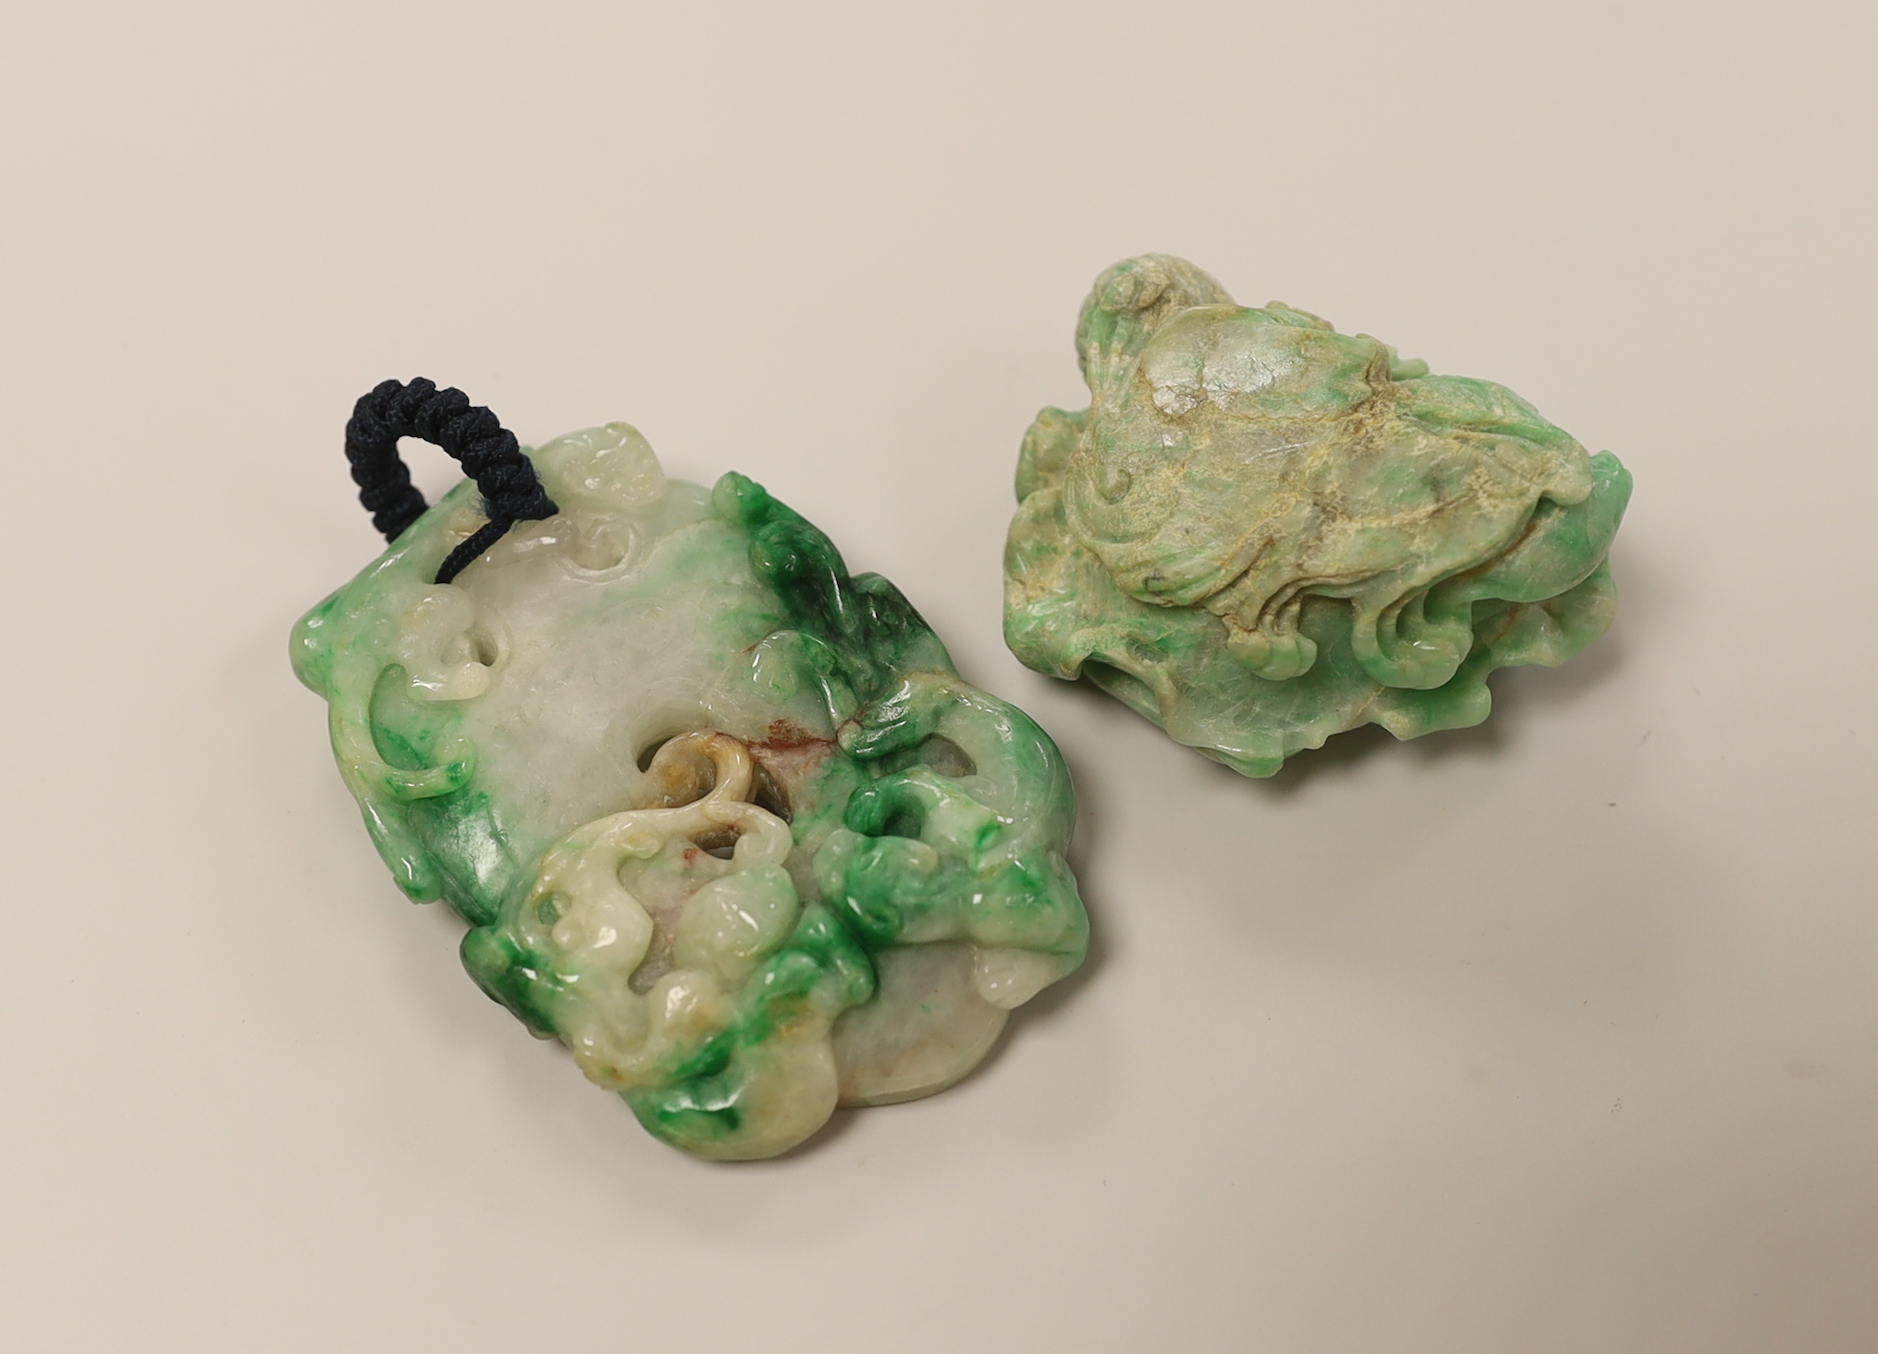 A 19th century Chinese jadeite 'chilong' pendant and a similar brushwasher pendant 7cm long